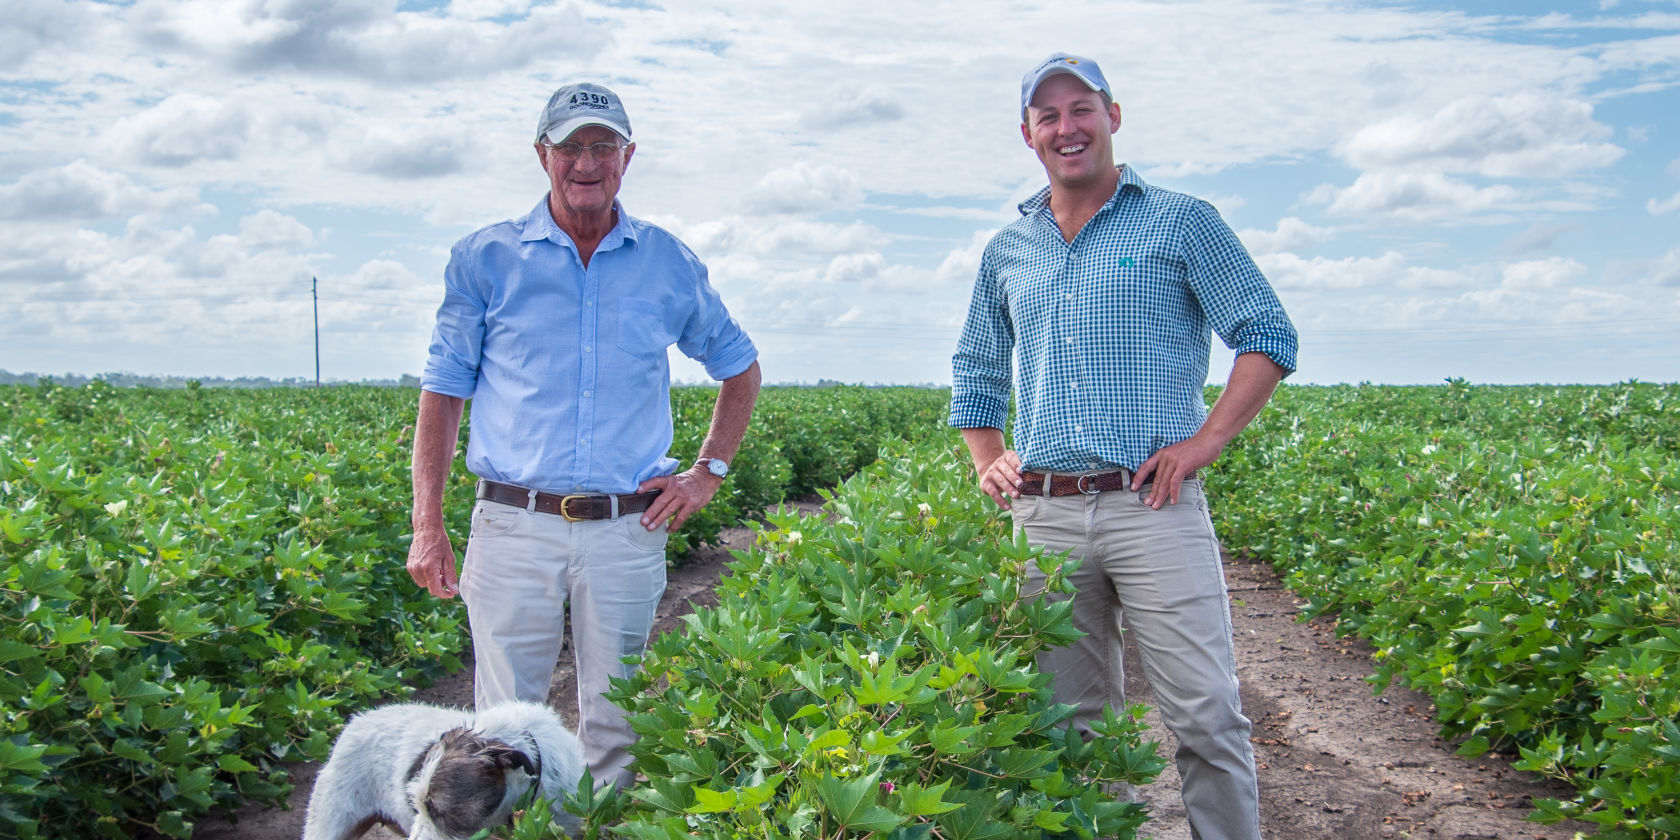 Diving into digital changes a cotton farmer’s fortunes 